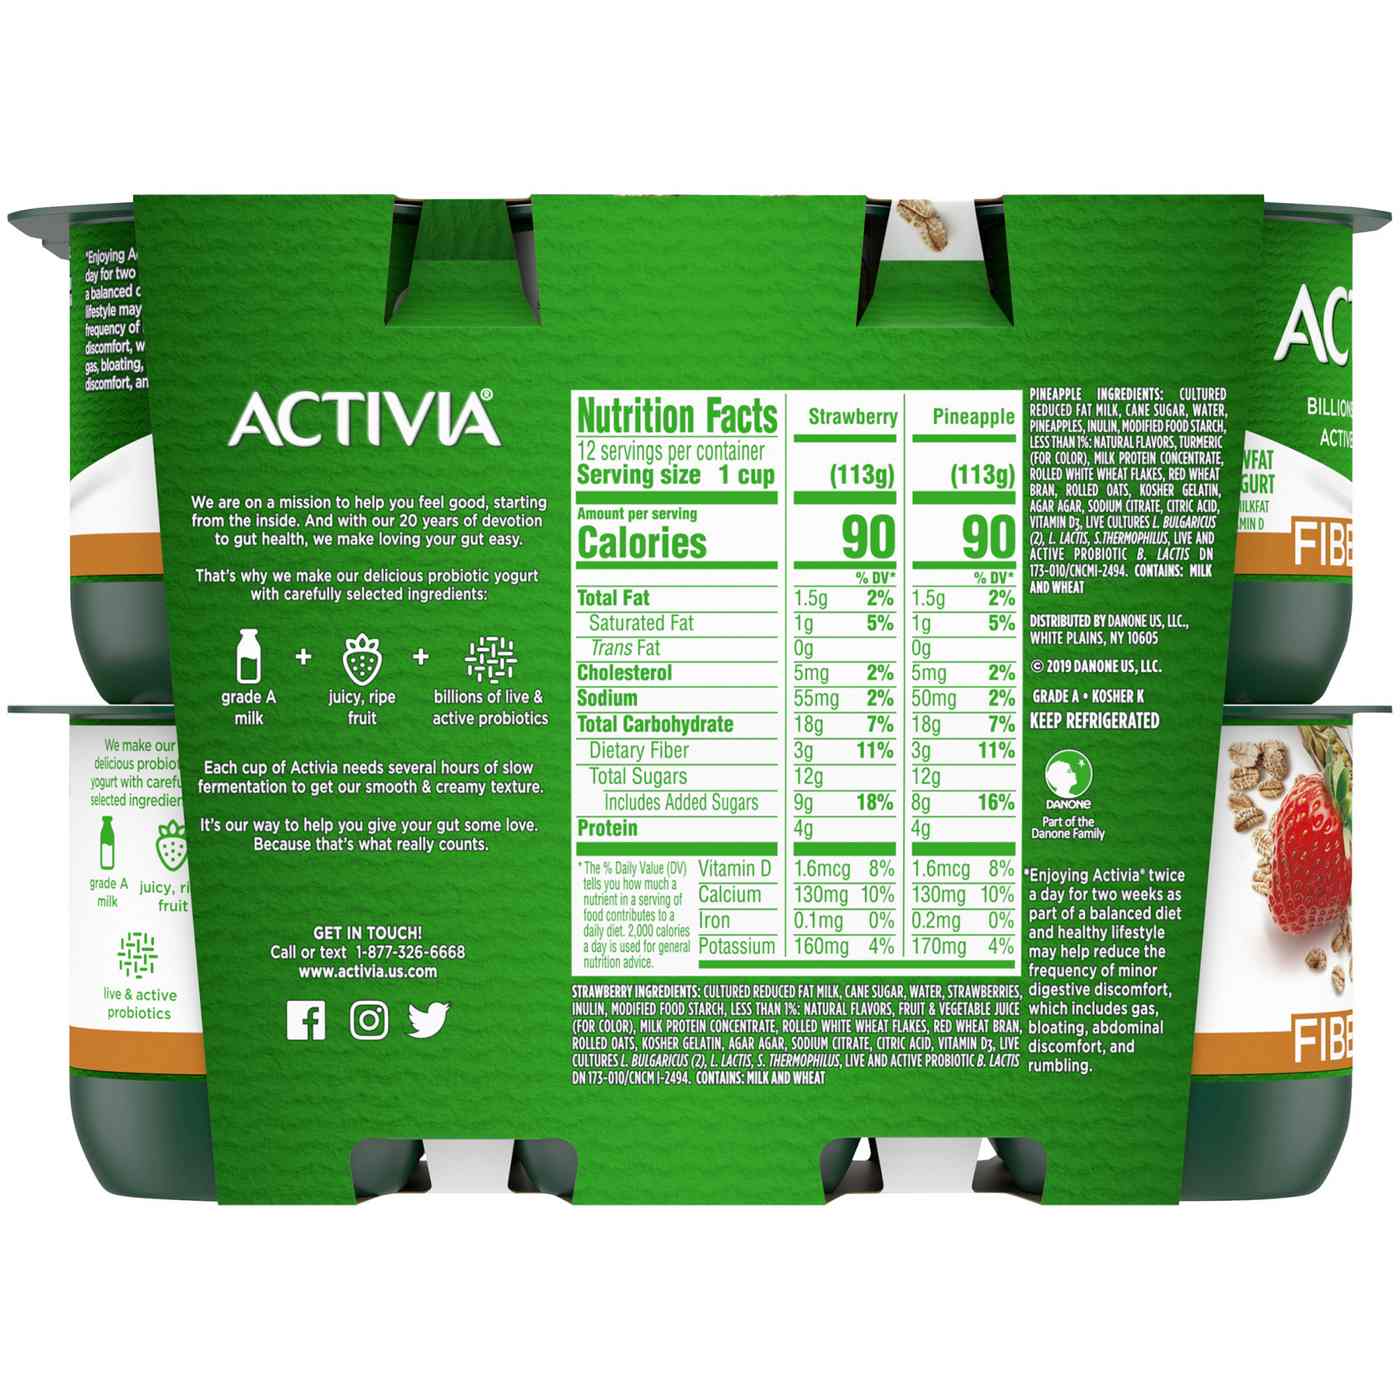 Activia Low Fat Fiber with Prebiotics Strawberry & Pineapple Yogurt; image 3 of 5